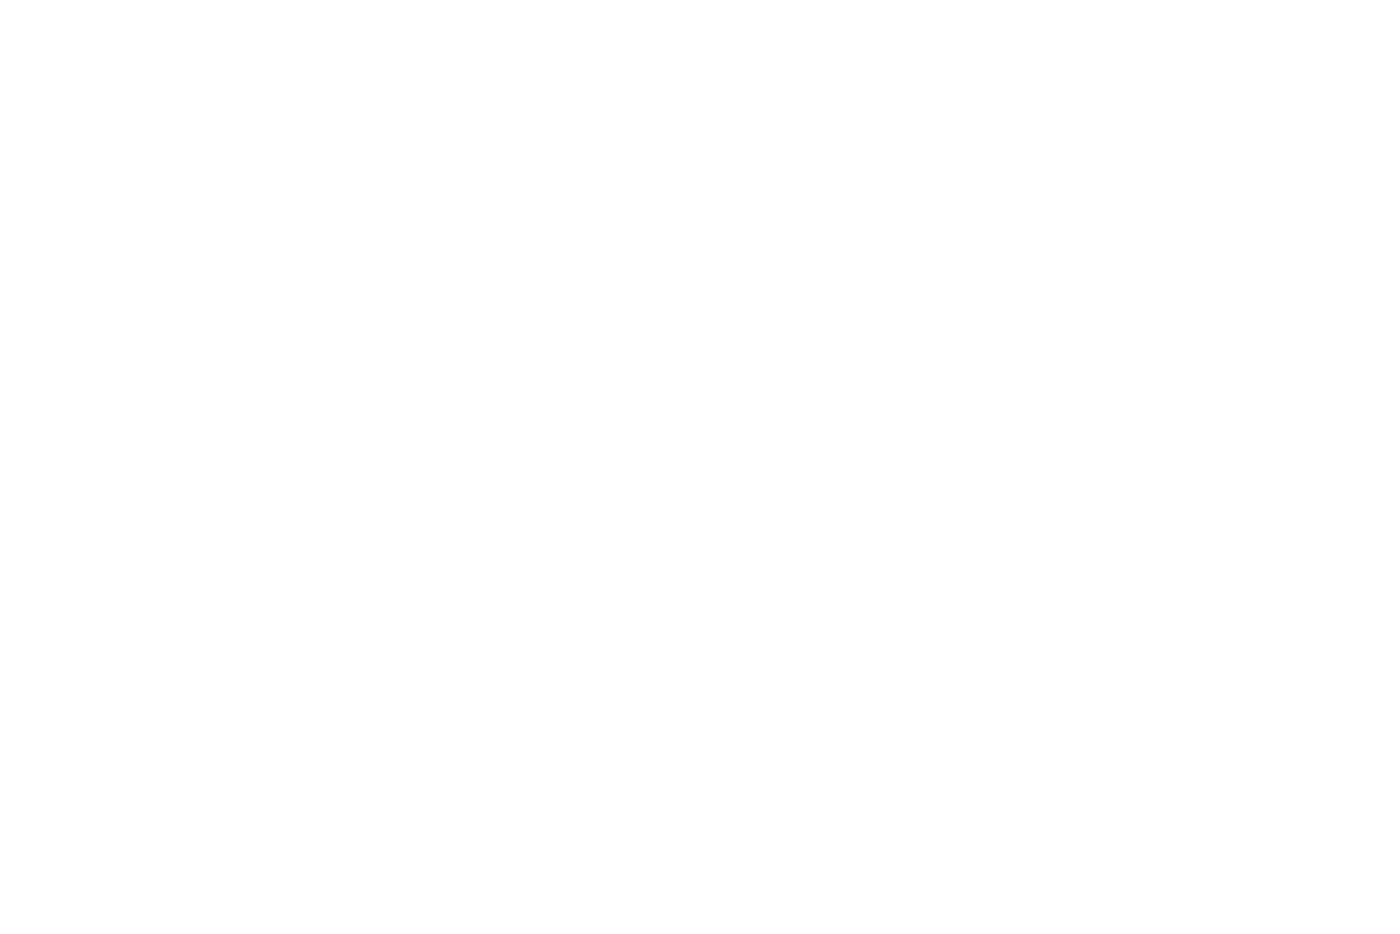 Font in use by Brokson script